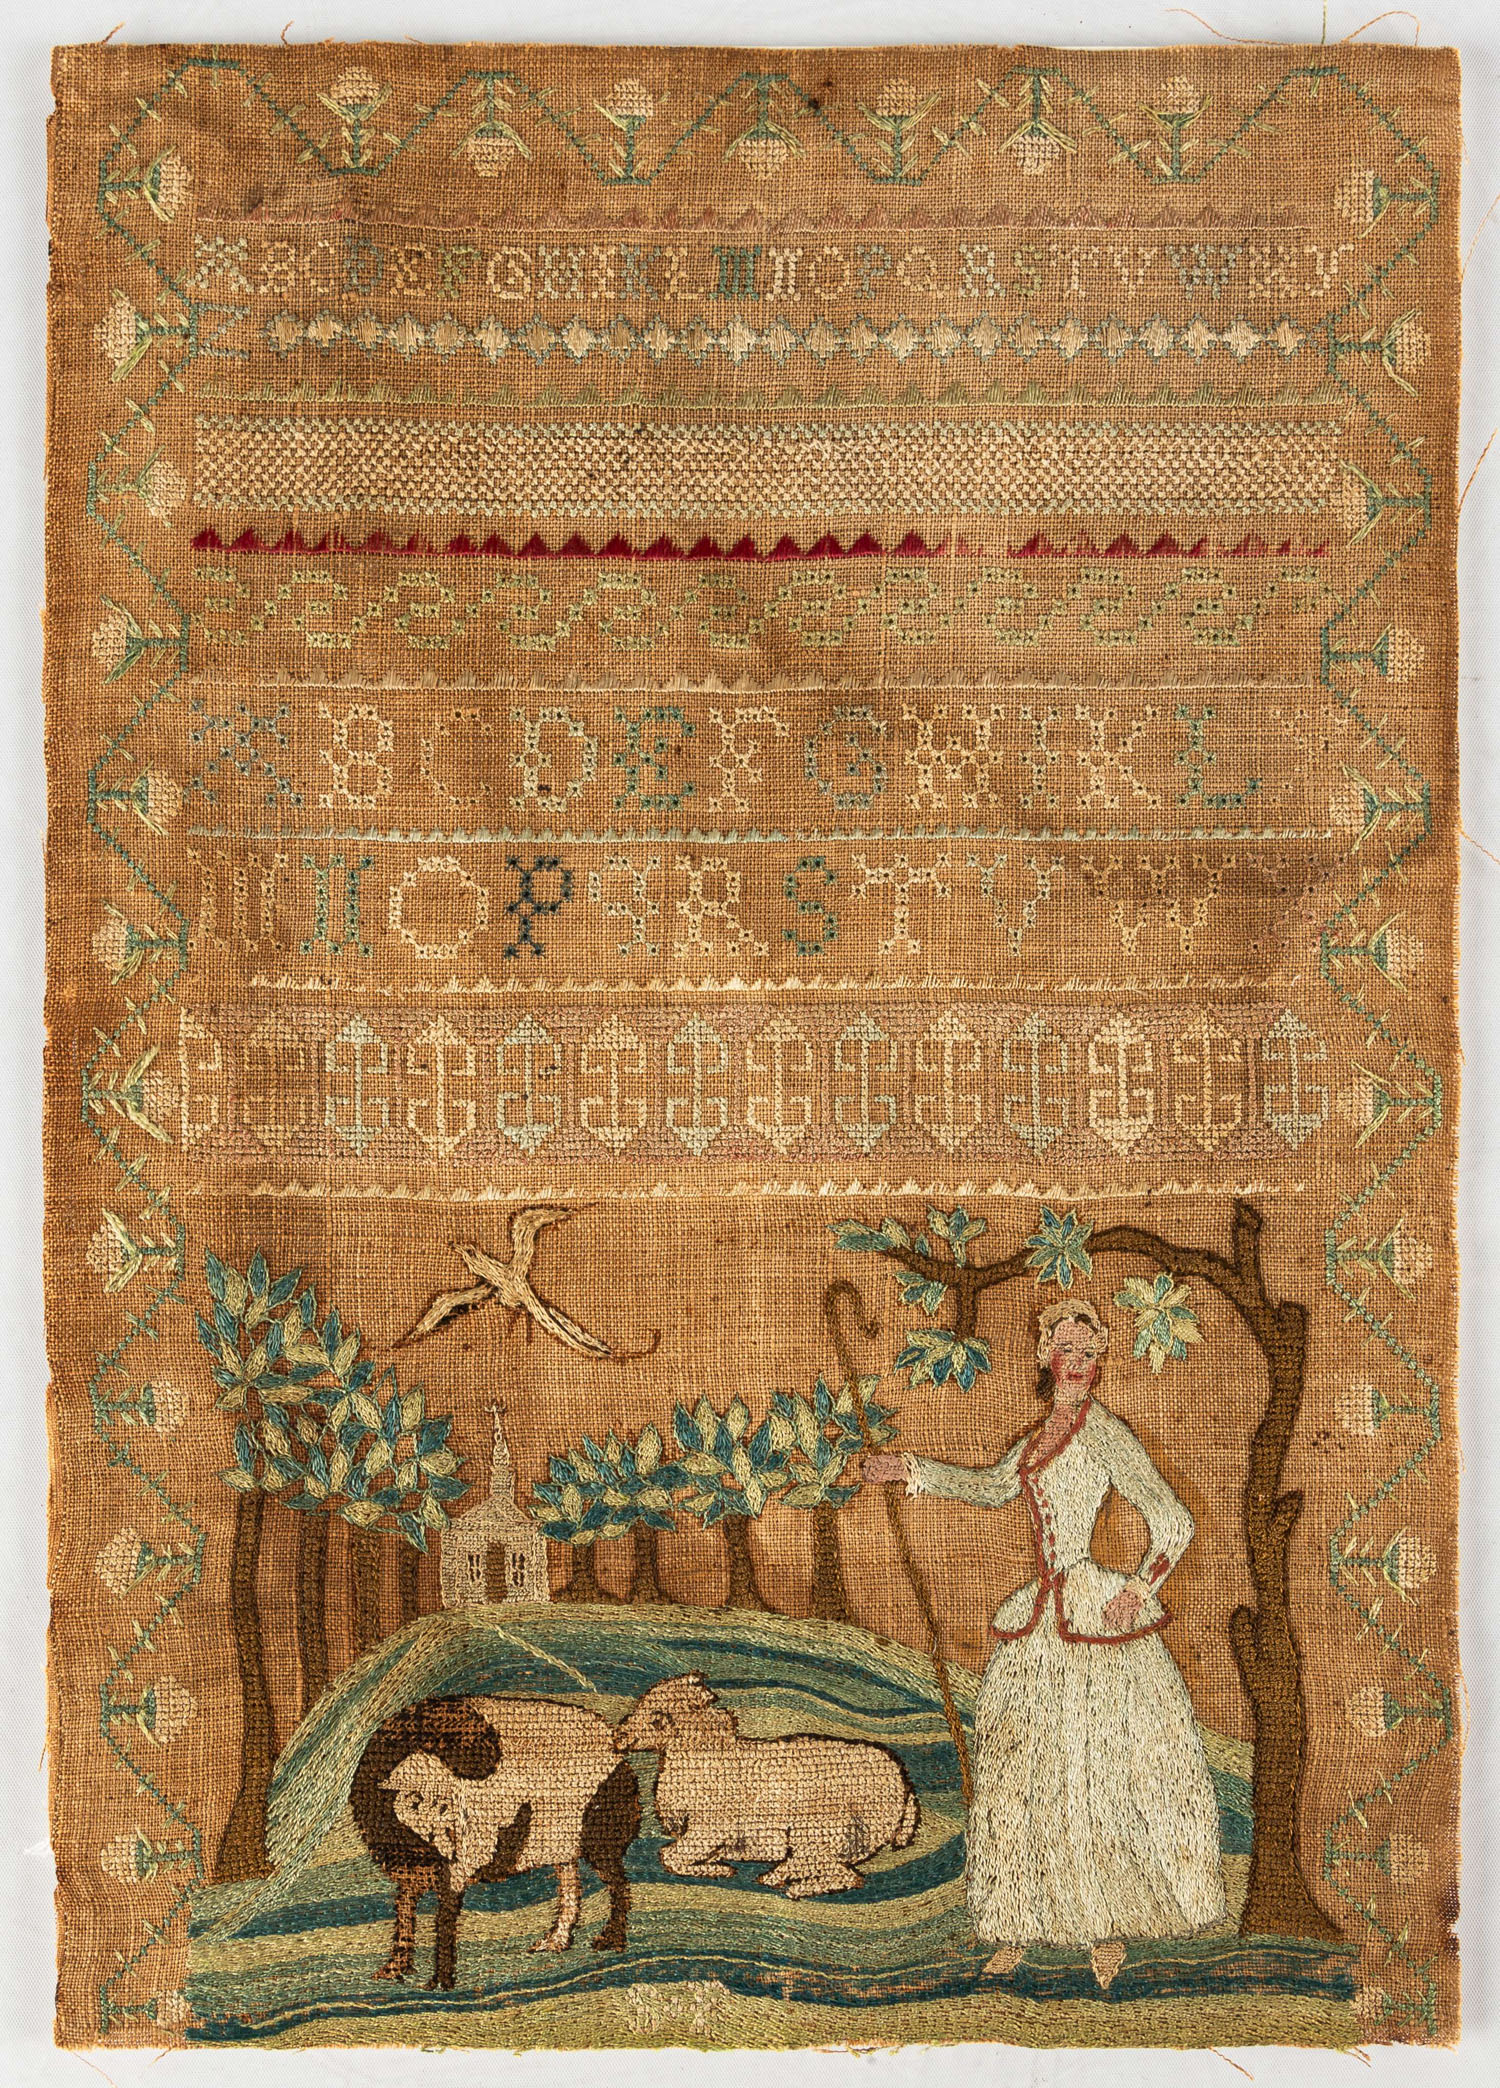 SAMPLER OF WOMAN SHEPHERD WITH ANIMALS